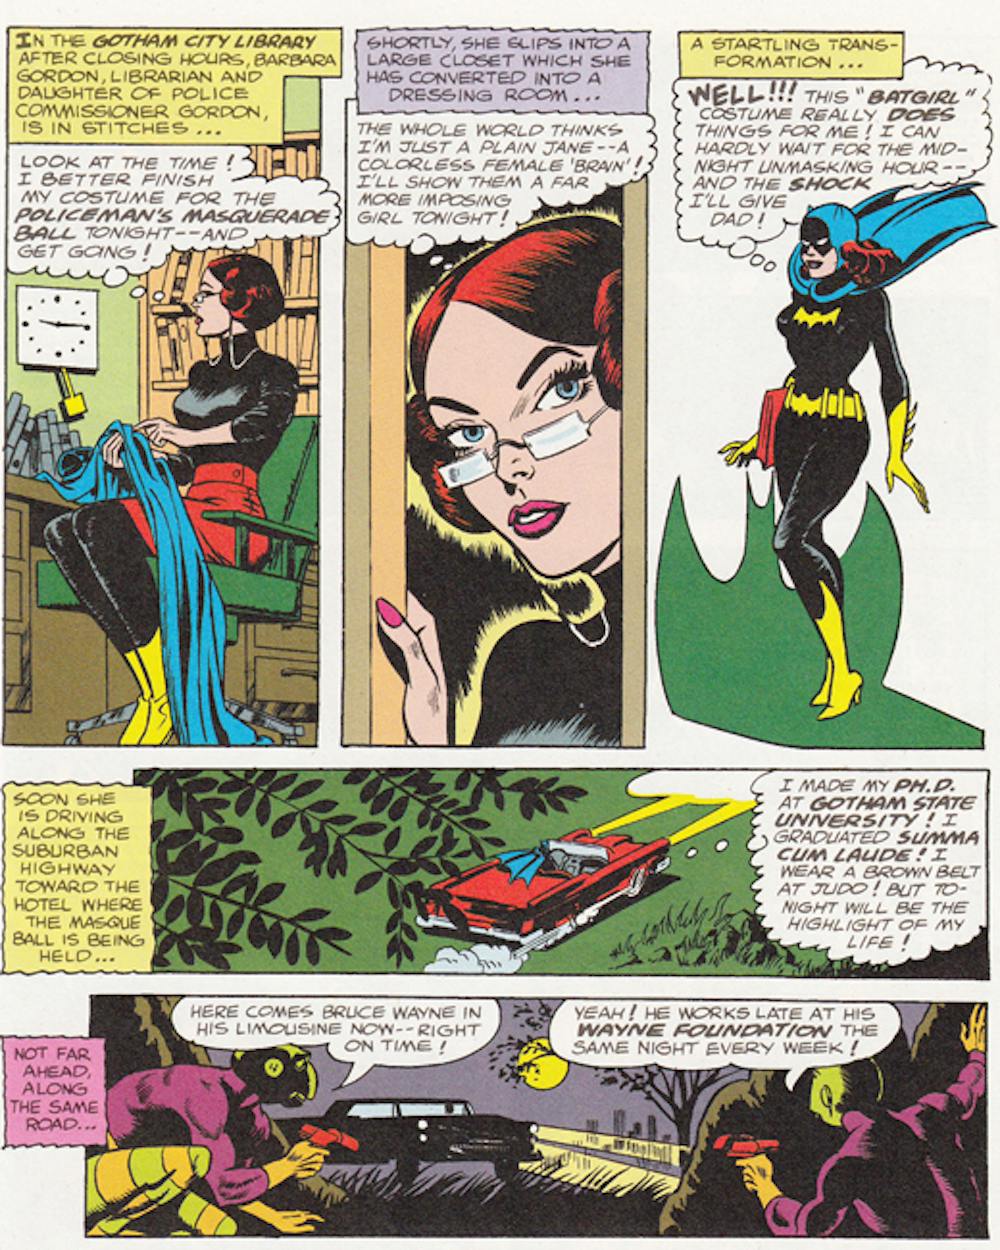 Barbara Gordon As Batgirl Porn - Move over Batgirl, our superheroine is just a normal human being